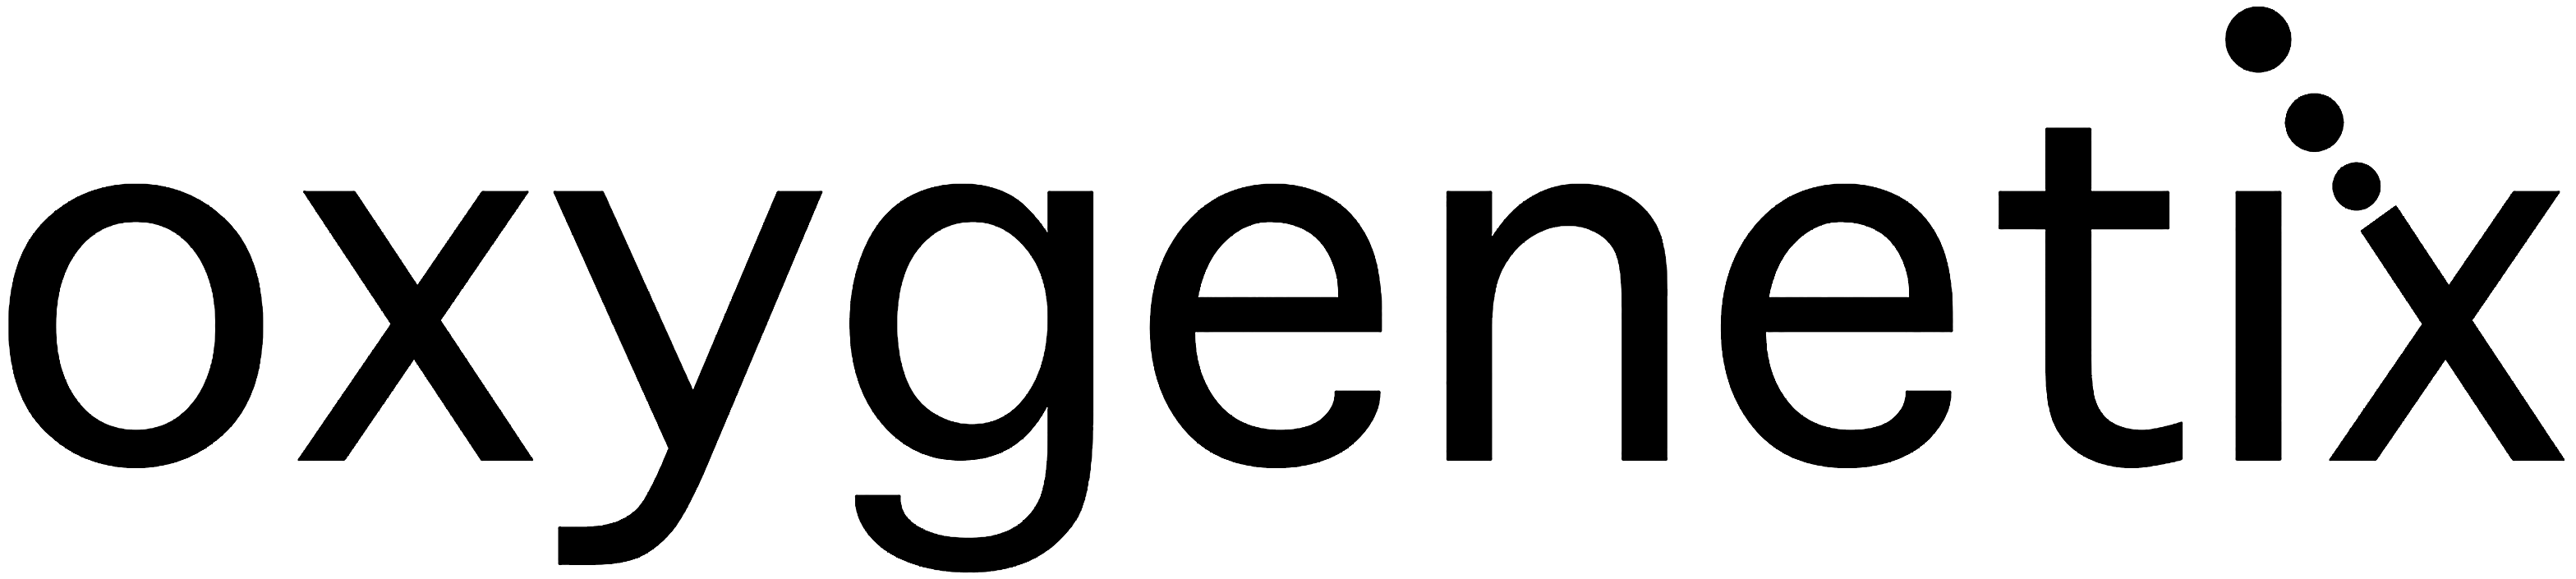 Oxygenetix-Logo-Black